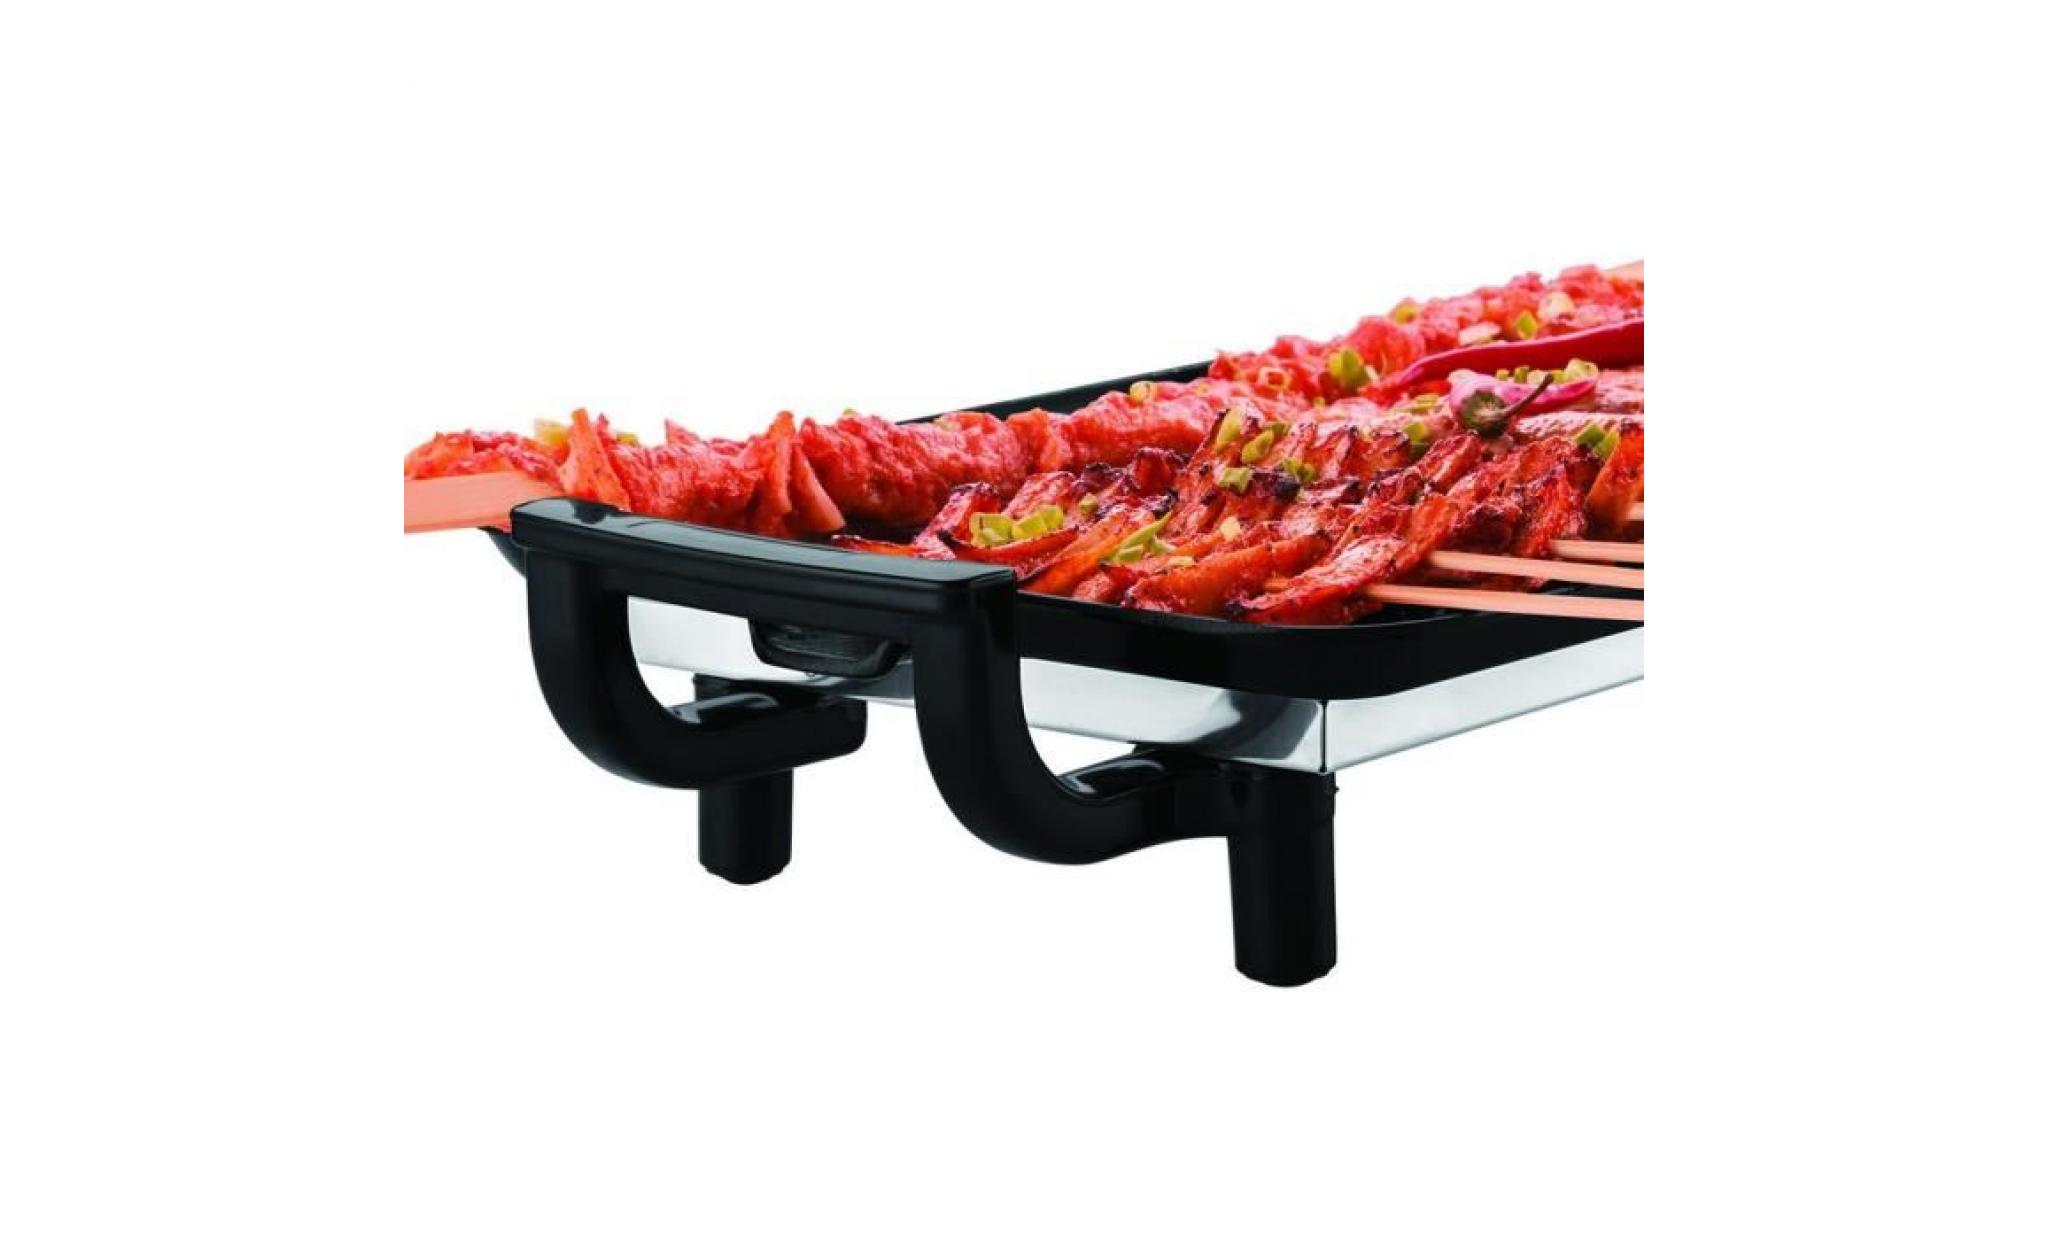 leshp® grille de barbecue   plaque de plancha plaque de cuisson électrique pour barbecue grille de table teppanyaki  400 * 230 * pas cher